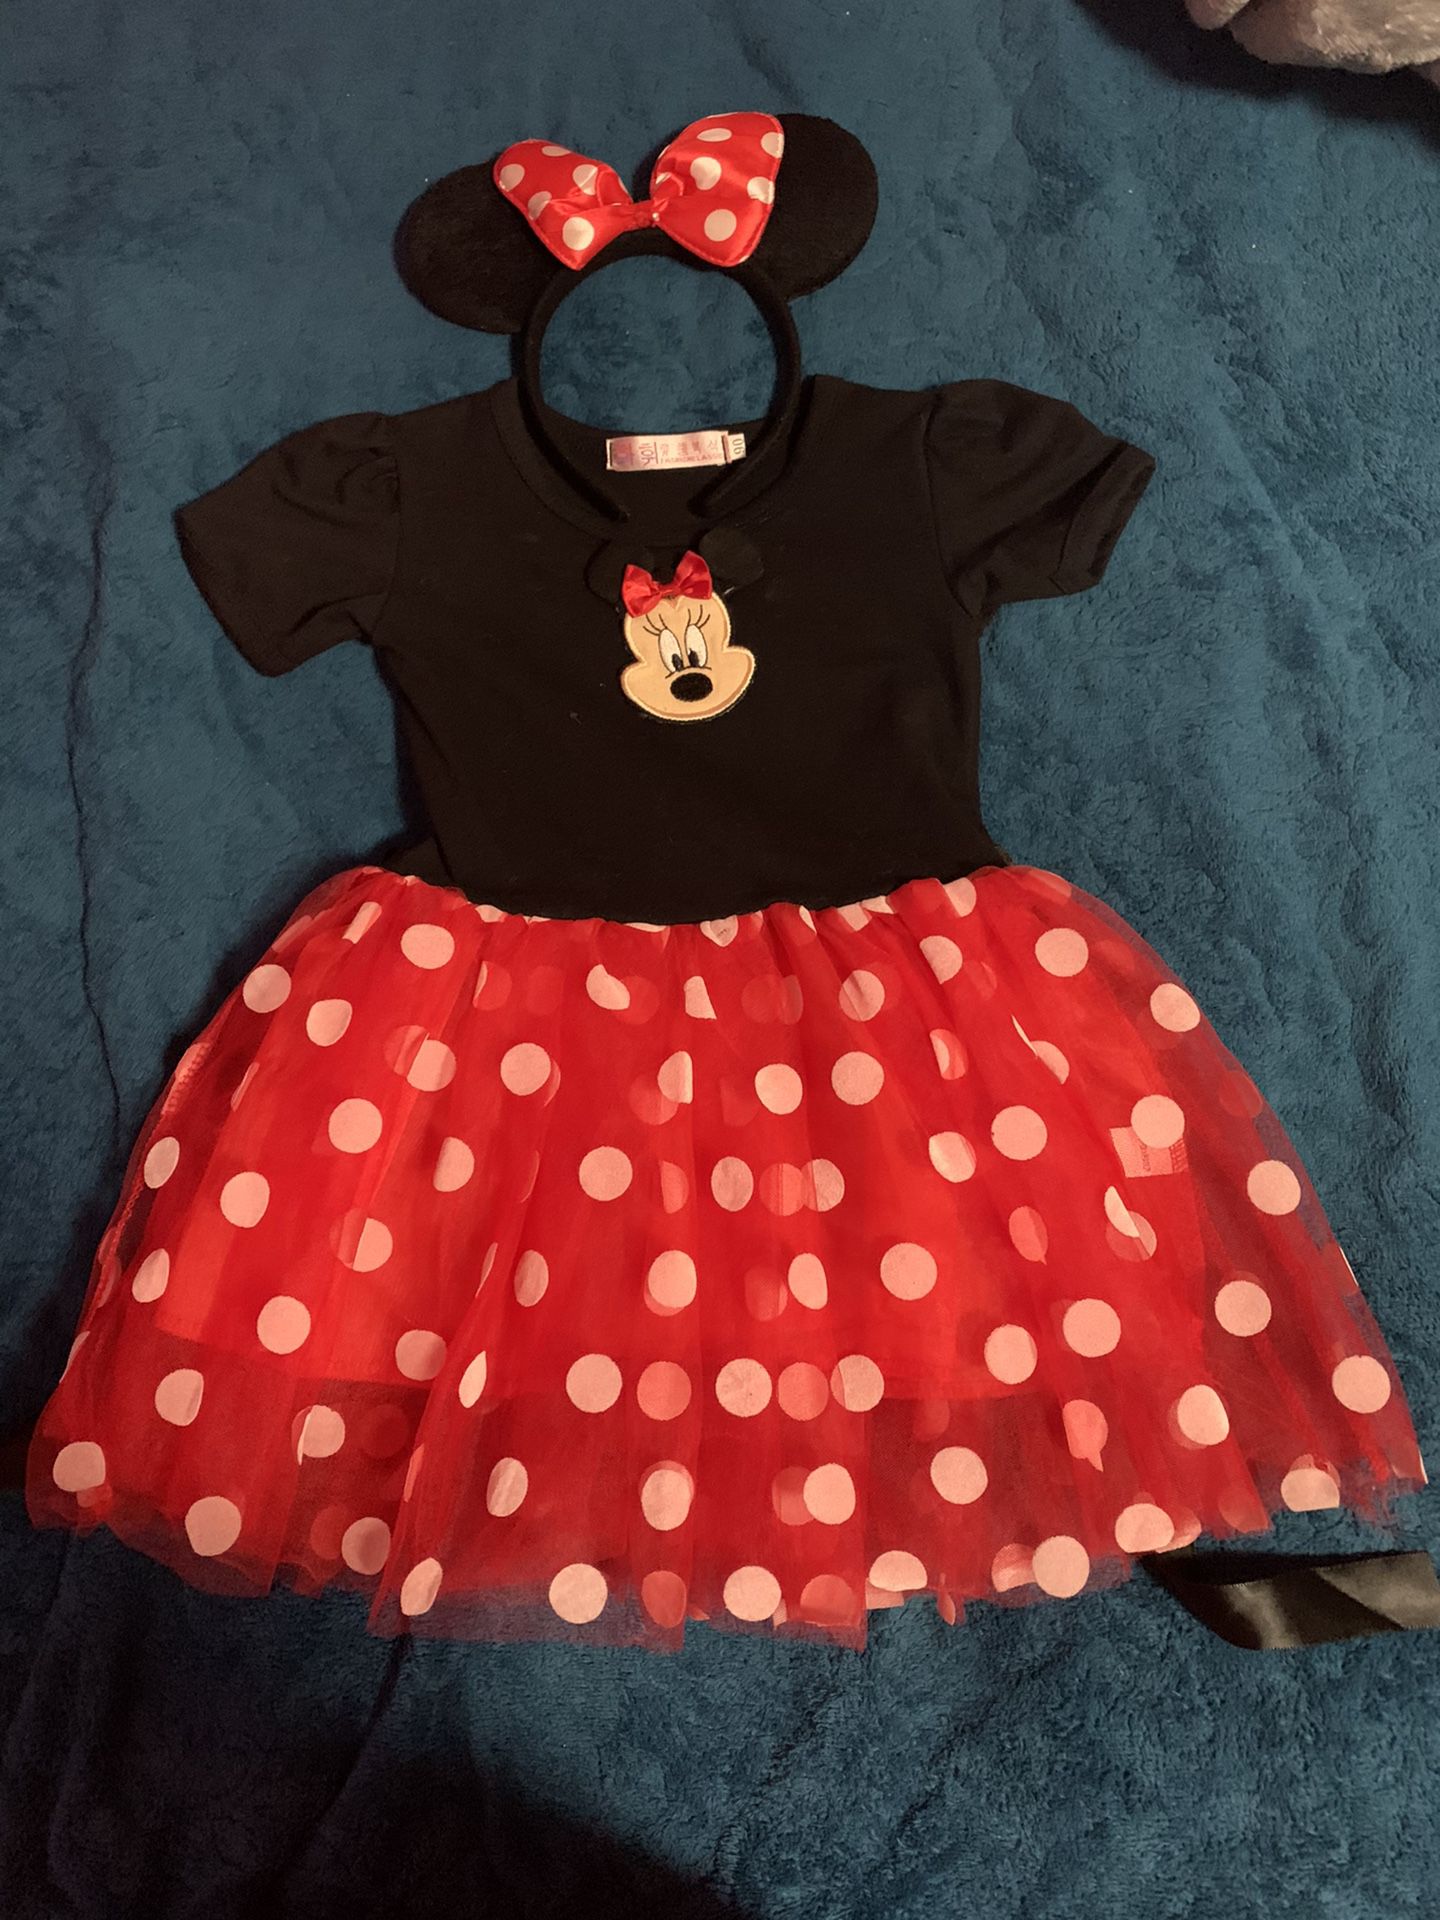 Mini Mouse toddler costume